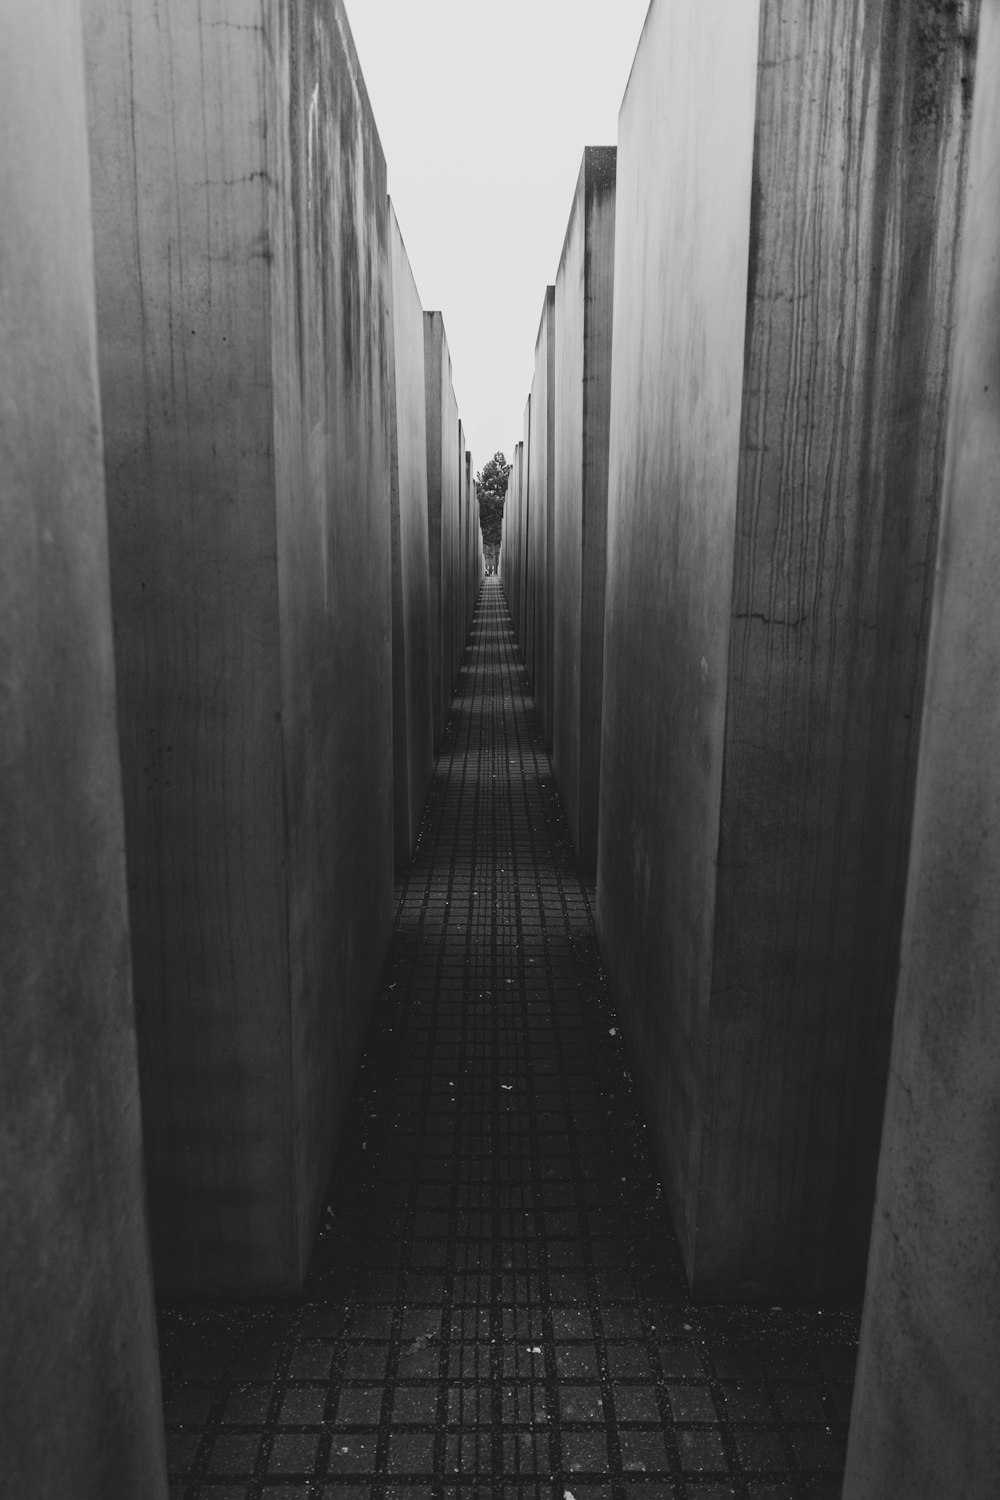 a person walking down a narrow hallway